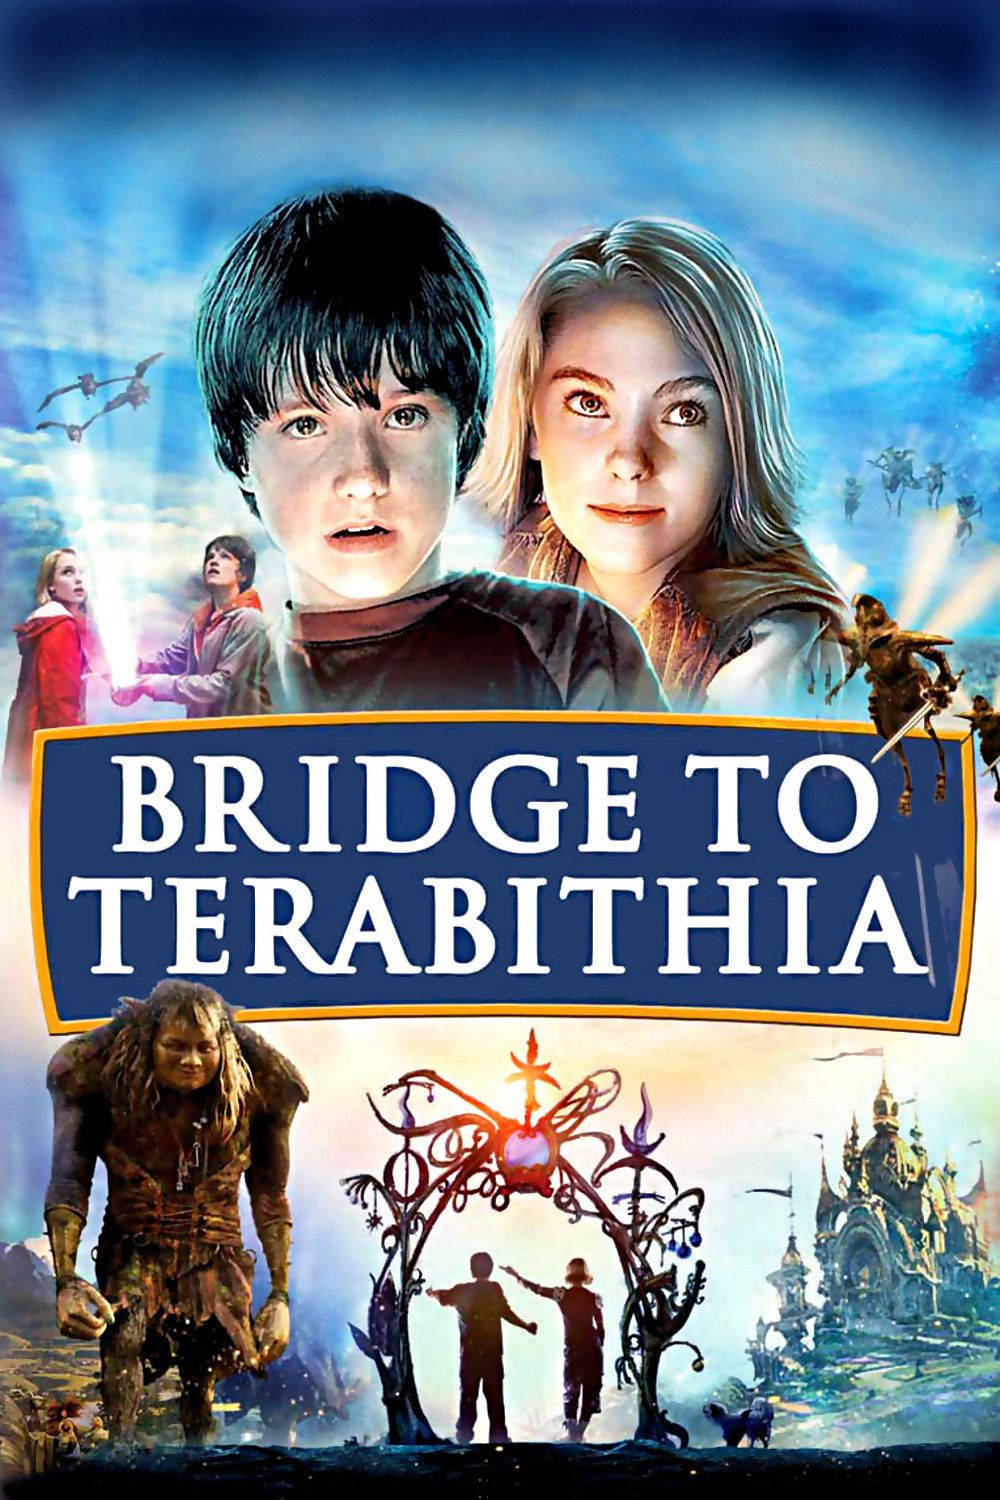 Top 999 Bridge To Terabithia Wallpaper Full Hd 4k Free To Use